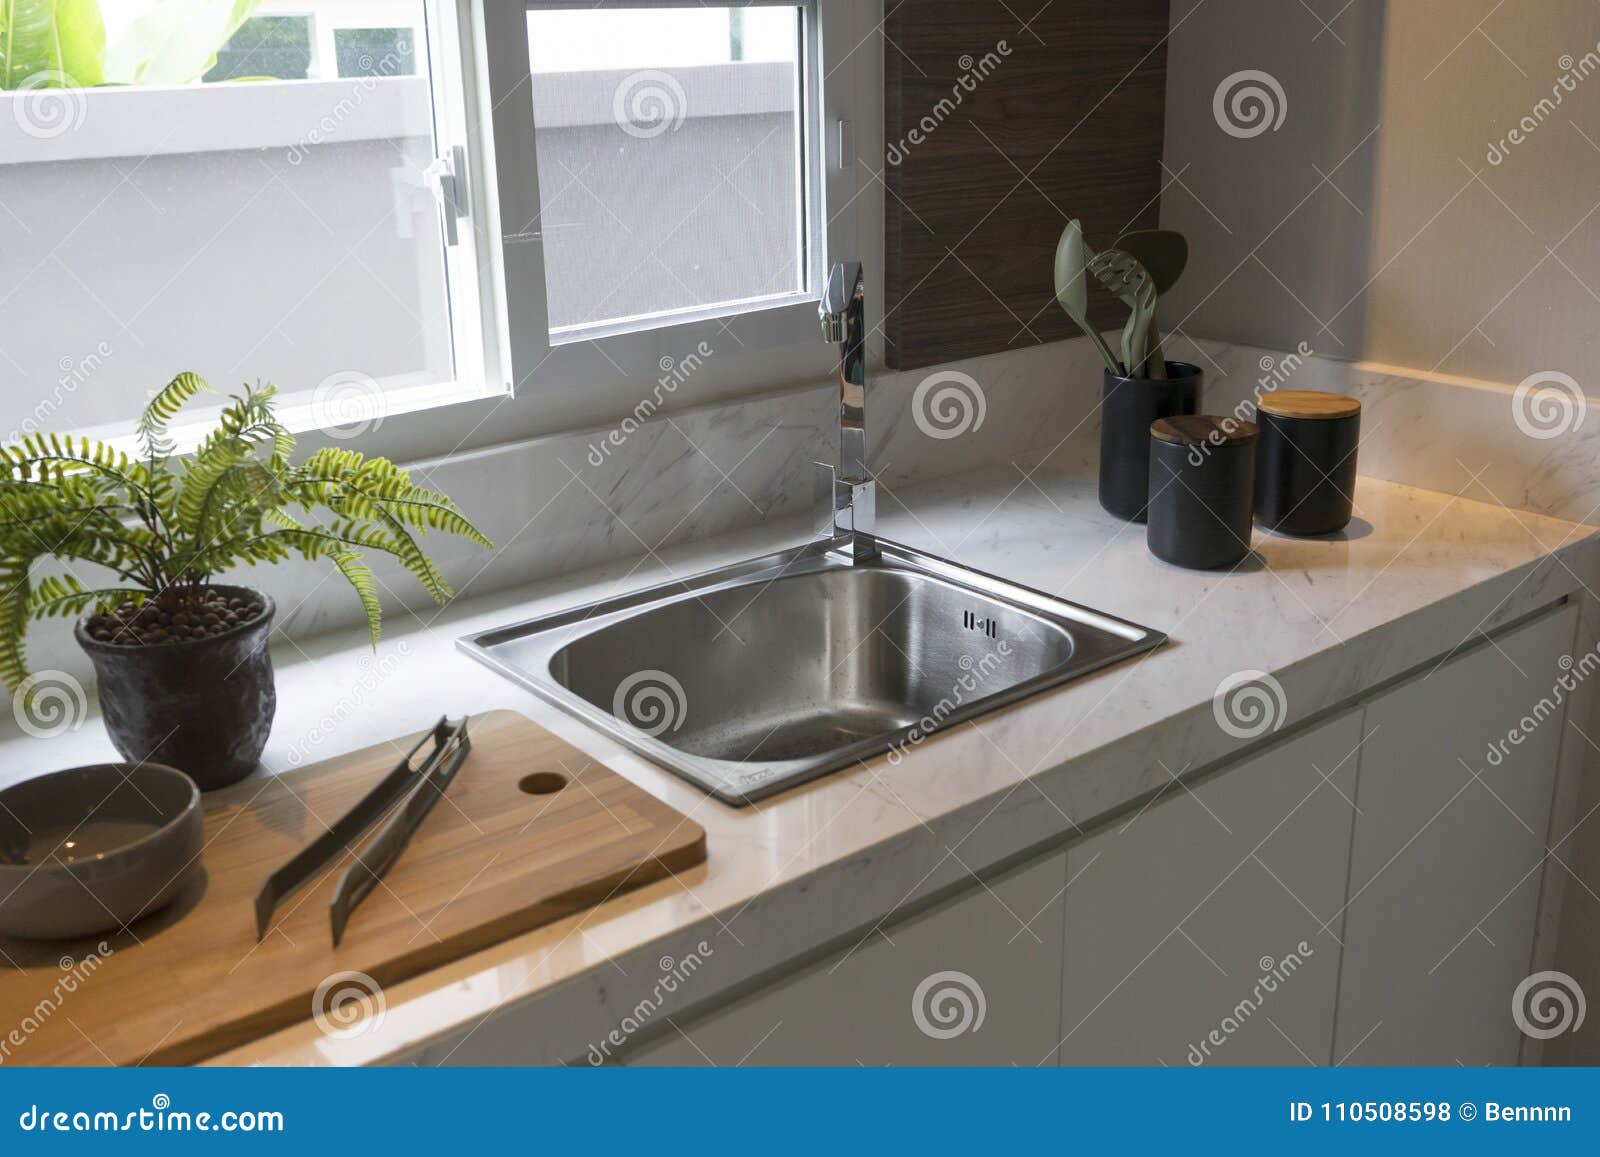 Kitchen Granite Counter Stock Photo Image Of Furniture 110508598